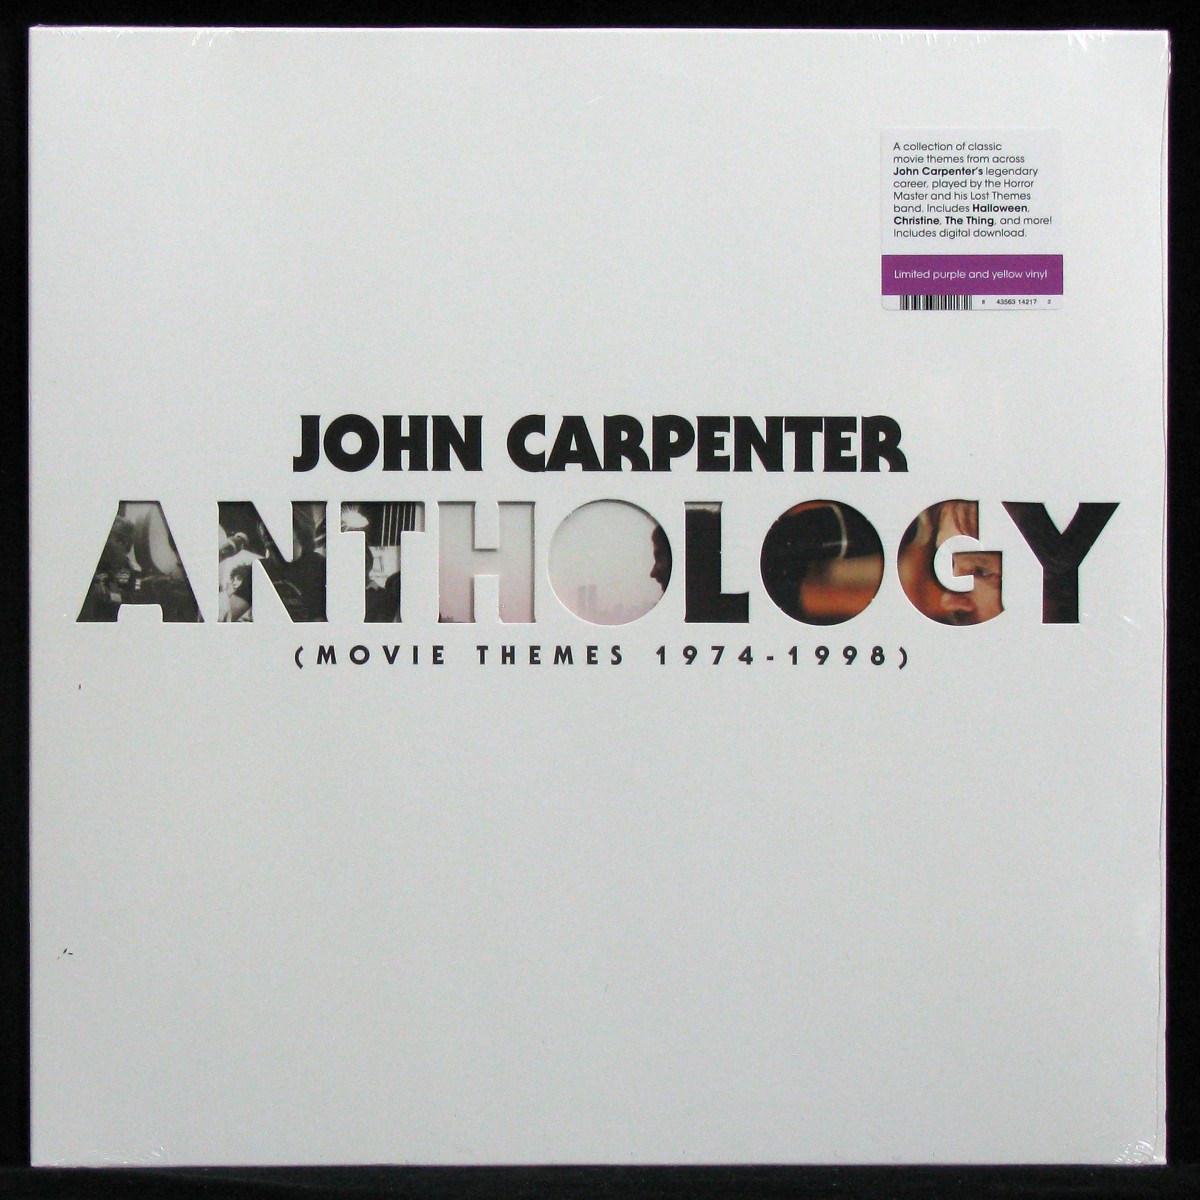 LP John Carpenter — Anthology (Movie Themes 1974-1998) (coloured vinyl) фото